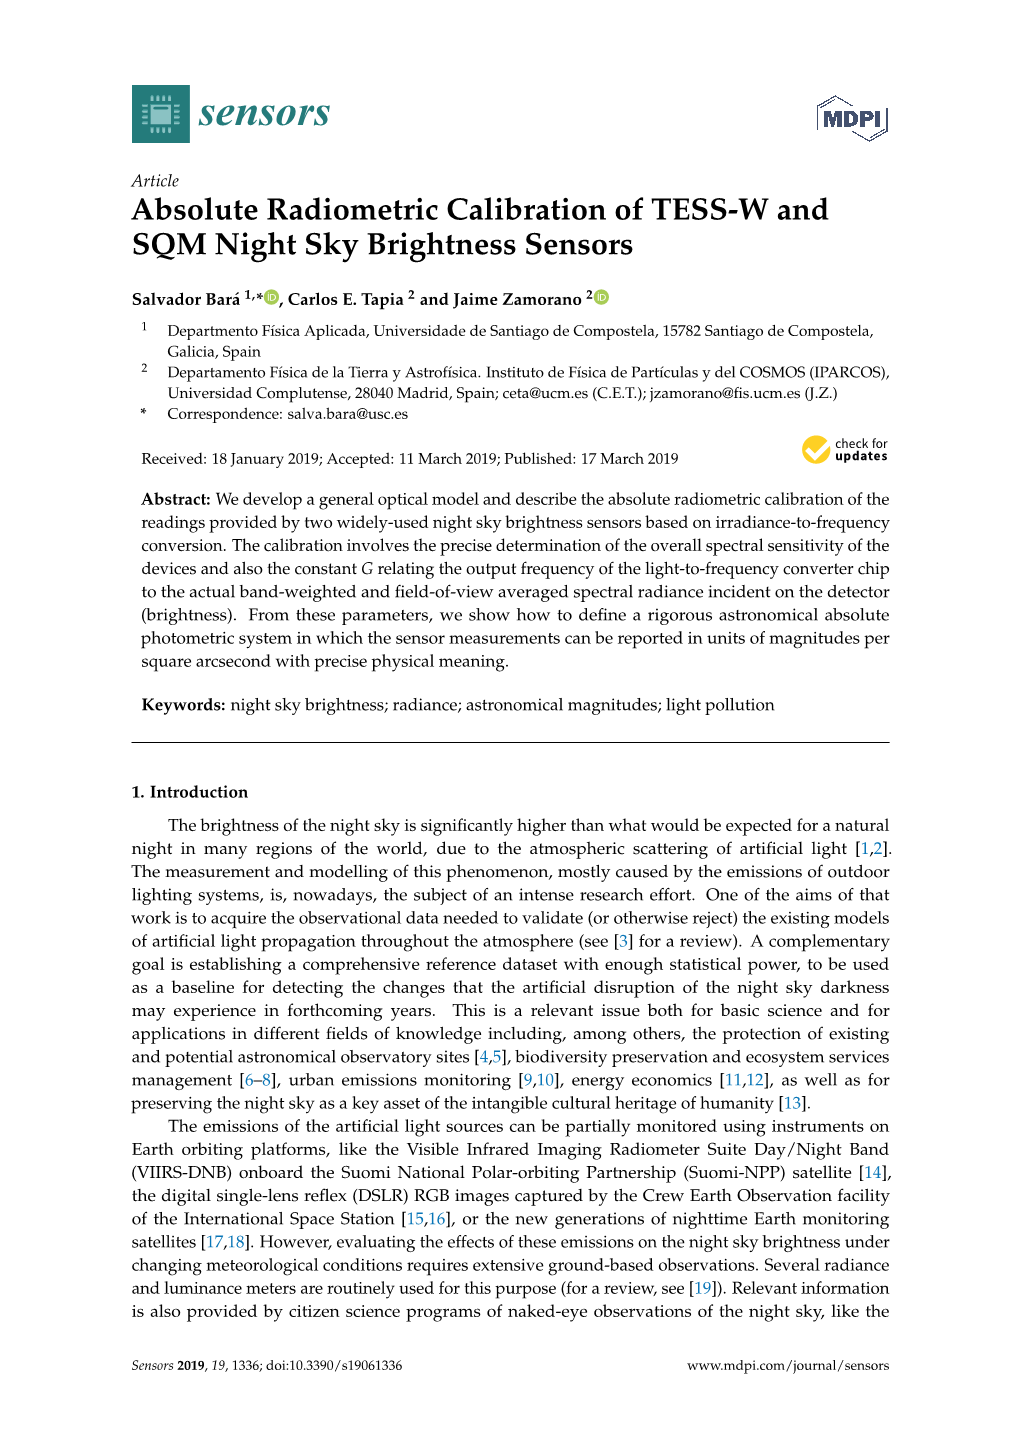 Absolute Radiometric Calibration of TESS-W and SQM Night Sky Brightness Sensors